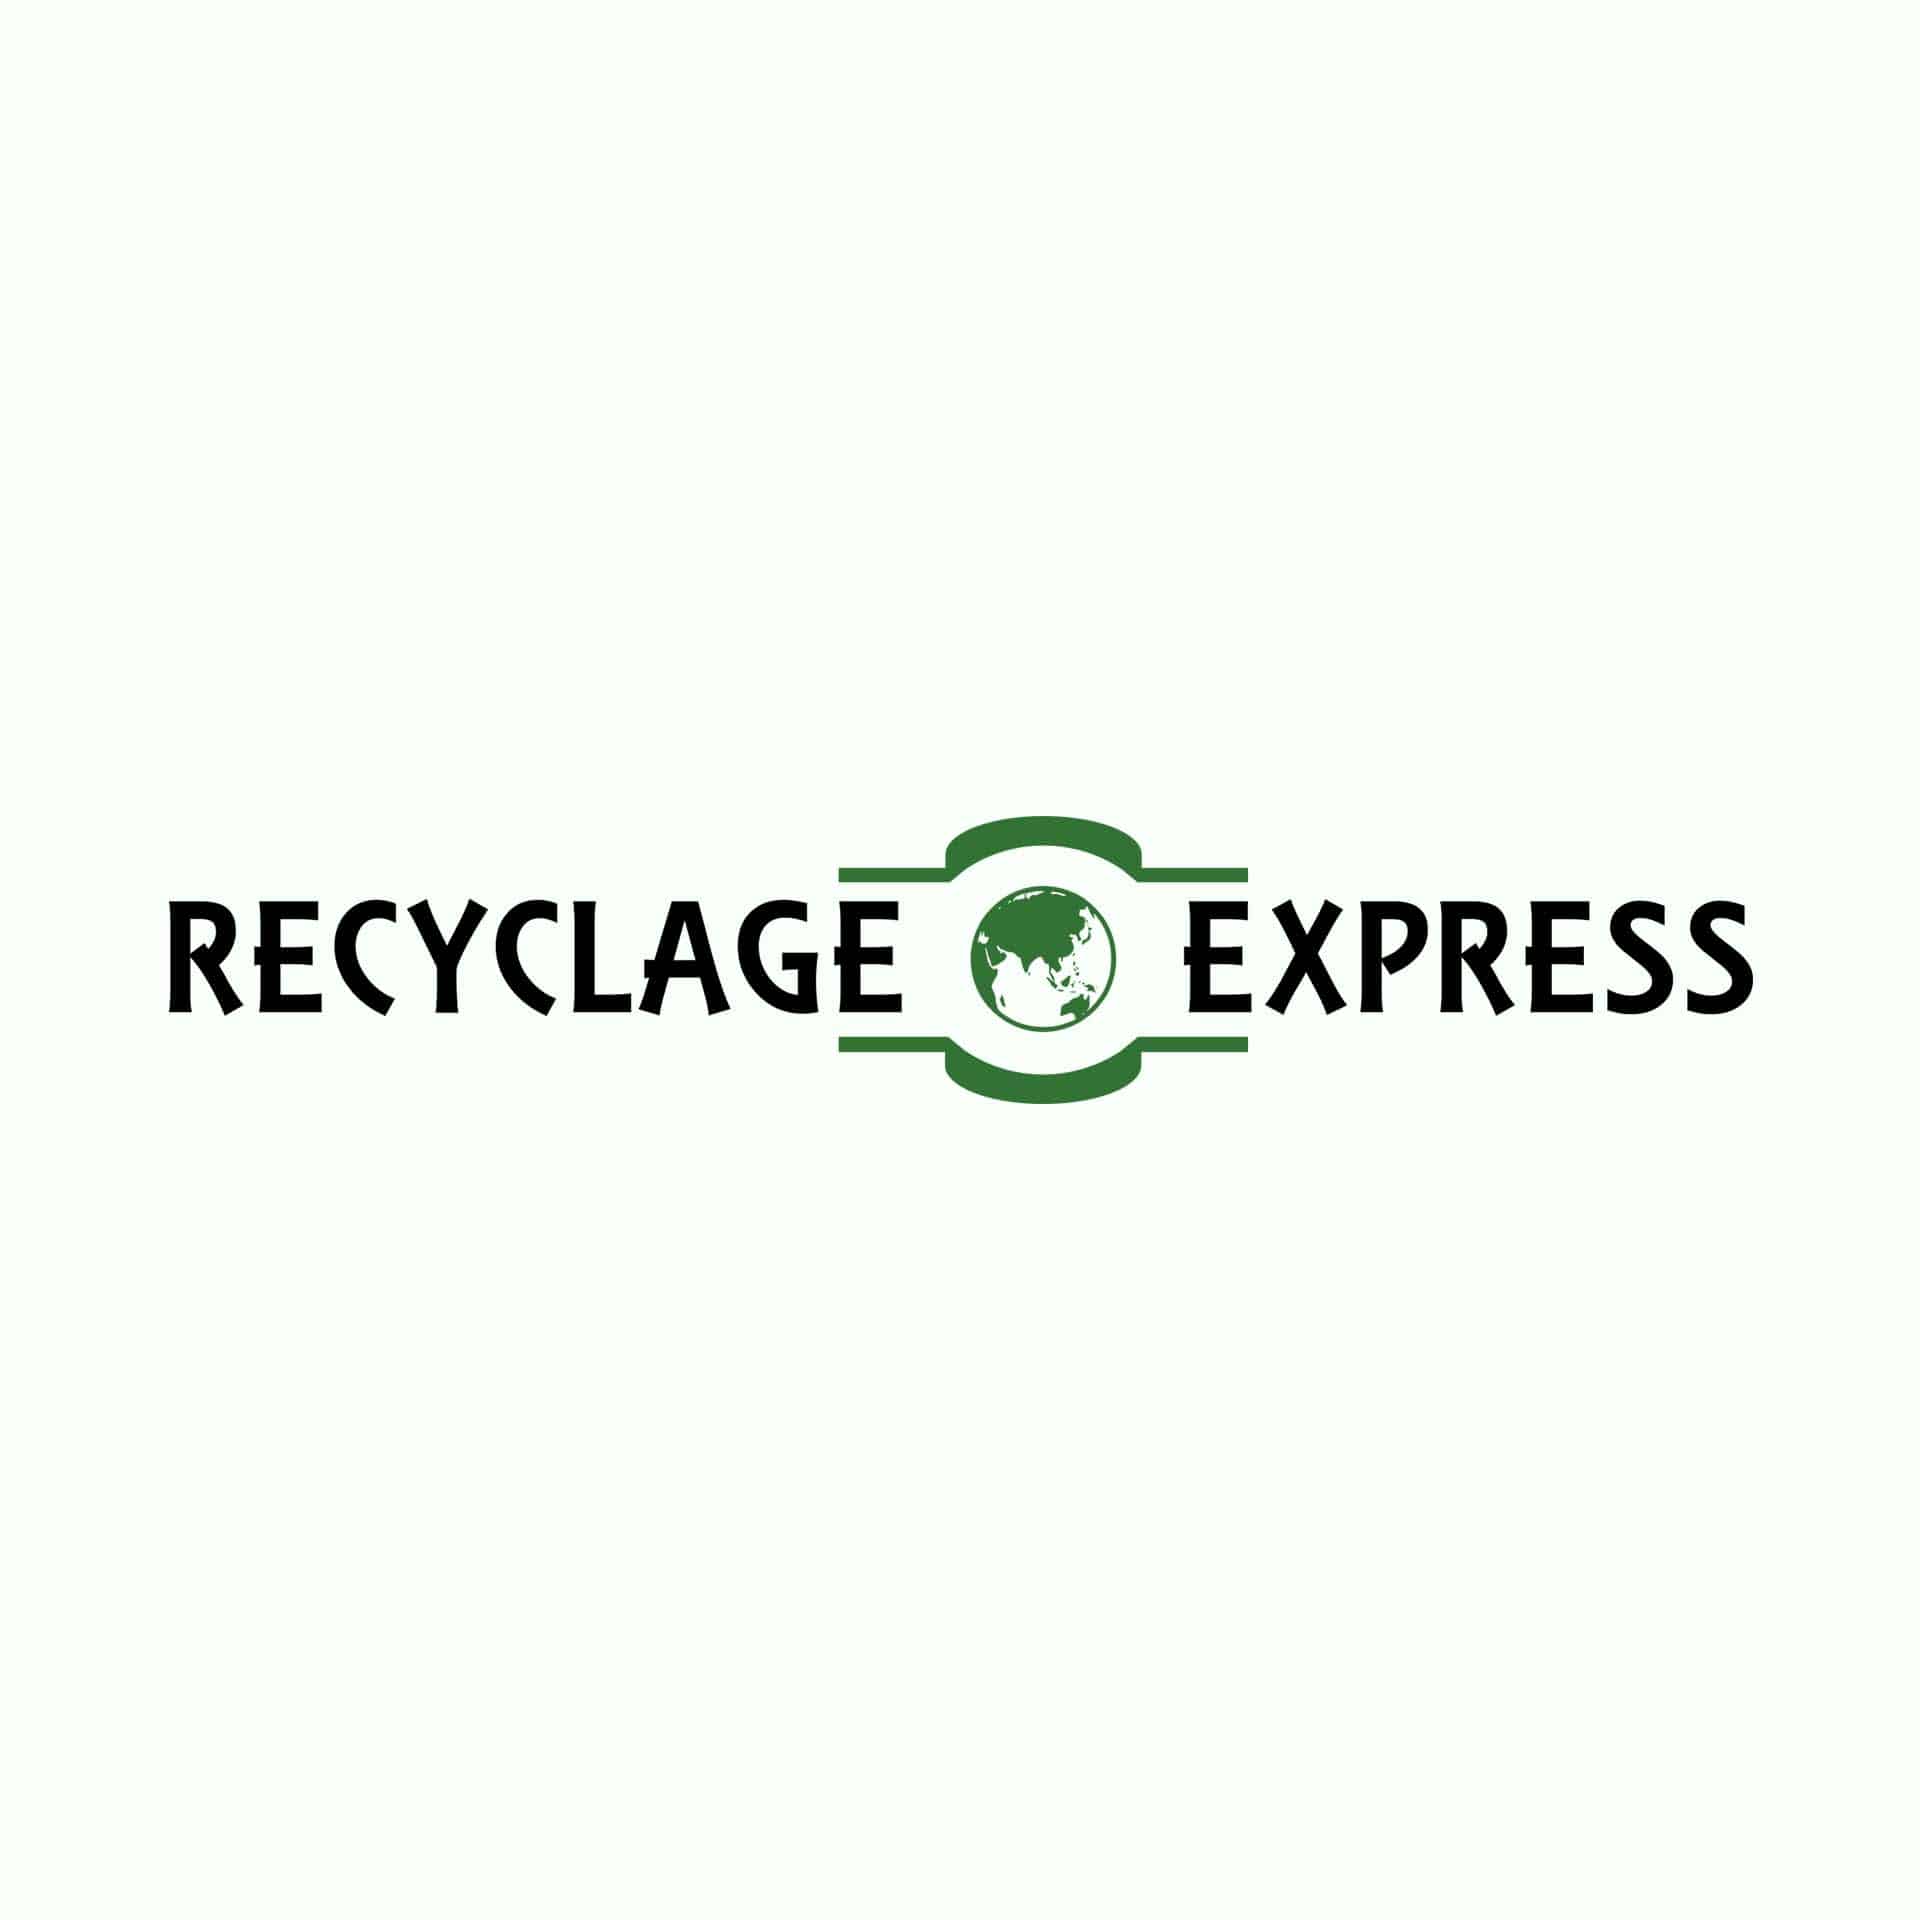 Express Recycling Logo